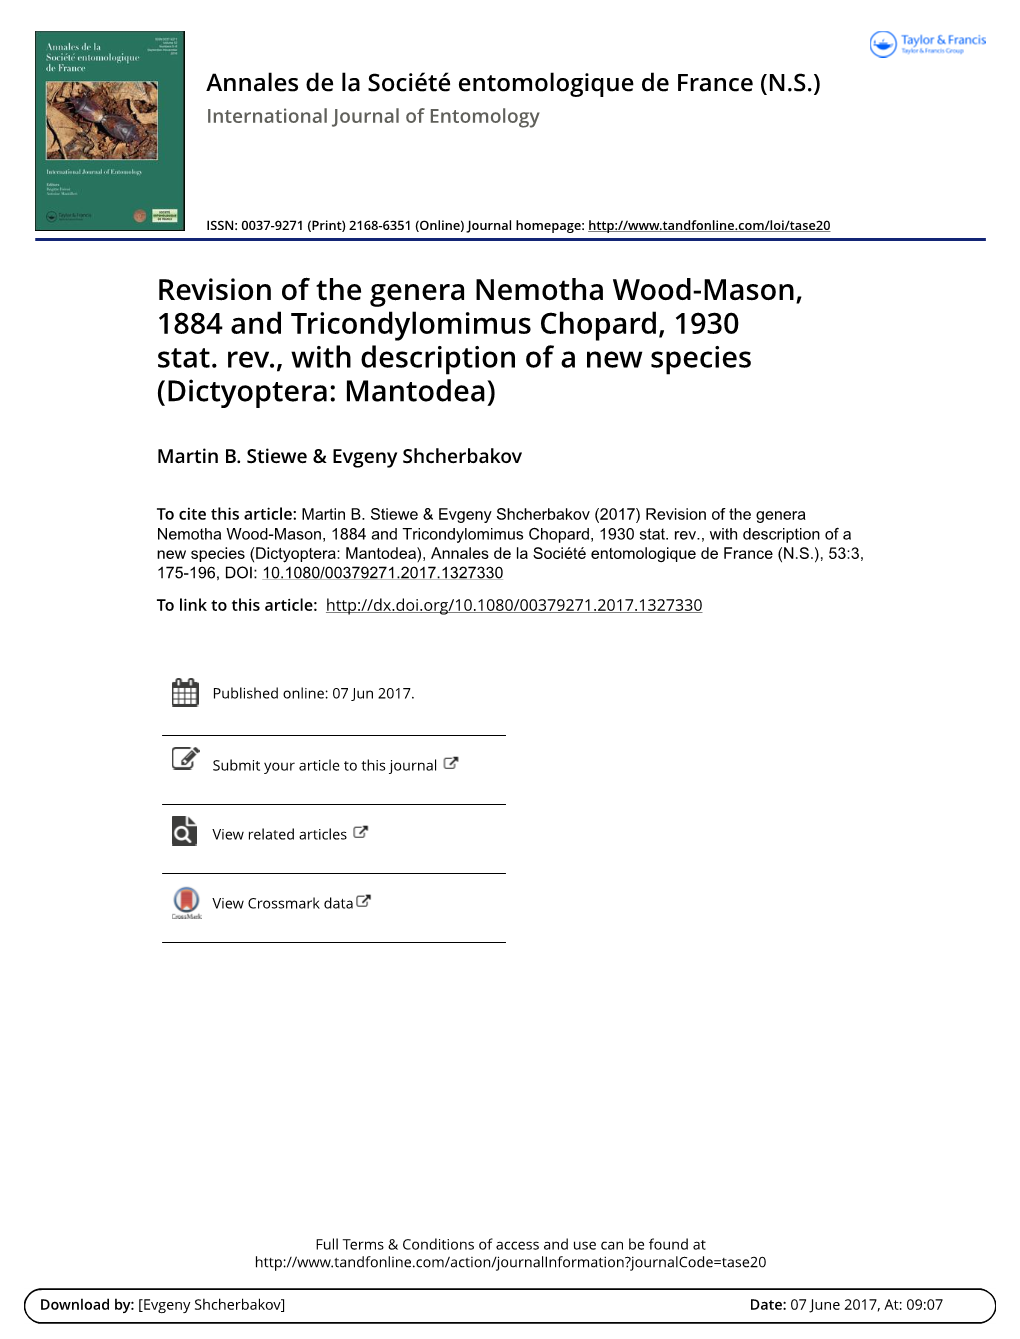 Revision of the Genera Nemotha Wood-Mason, 1884 and Tricondylomimus Chopard, 1930 Stat